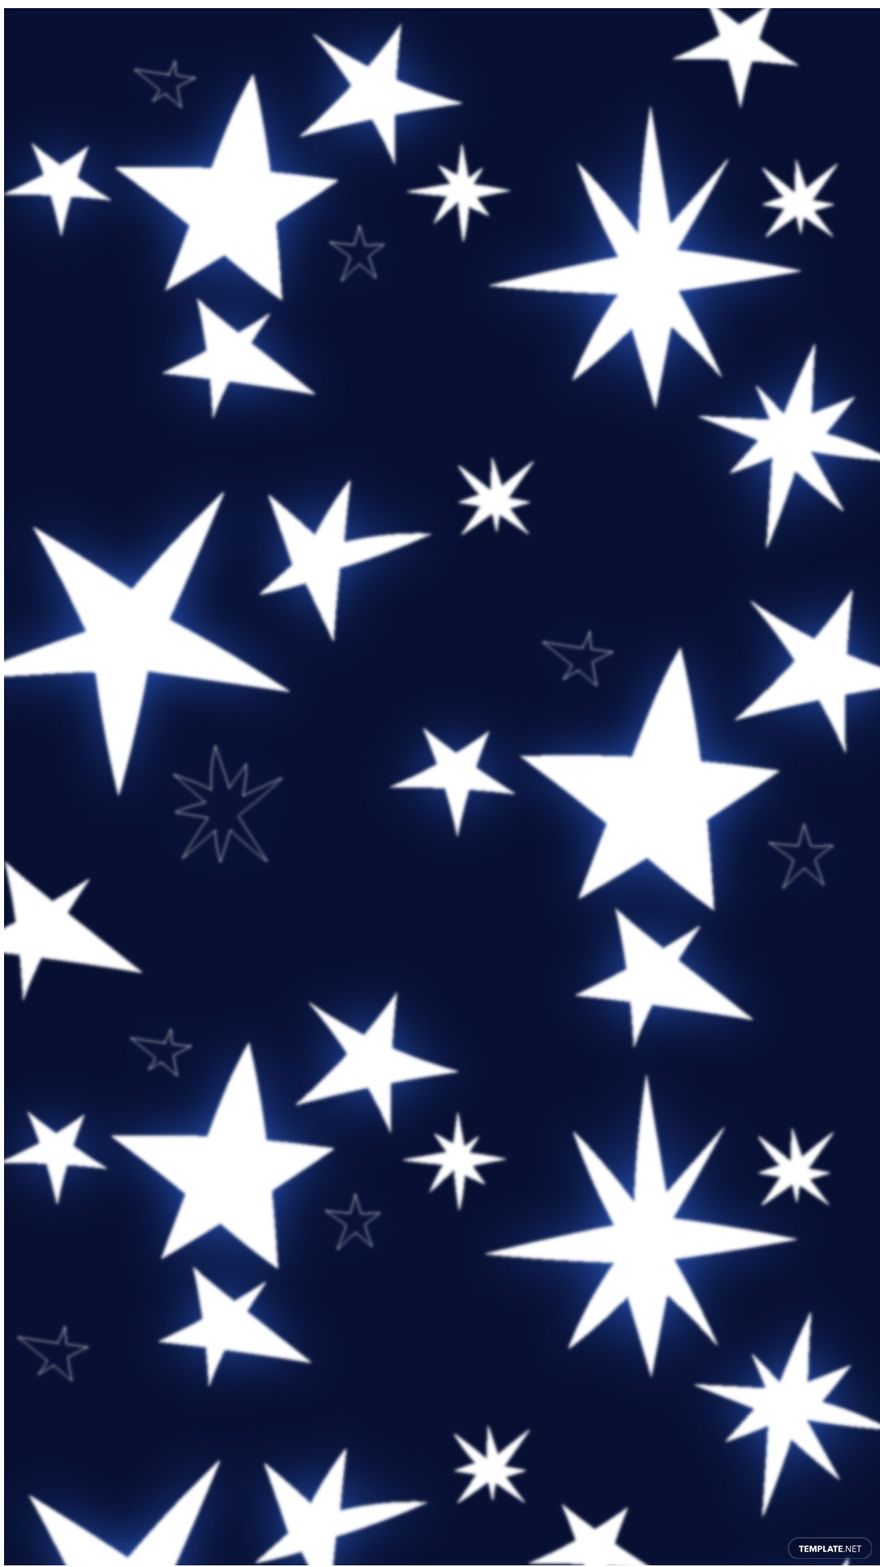 Free Glowing Stars Background